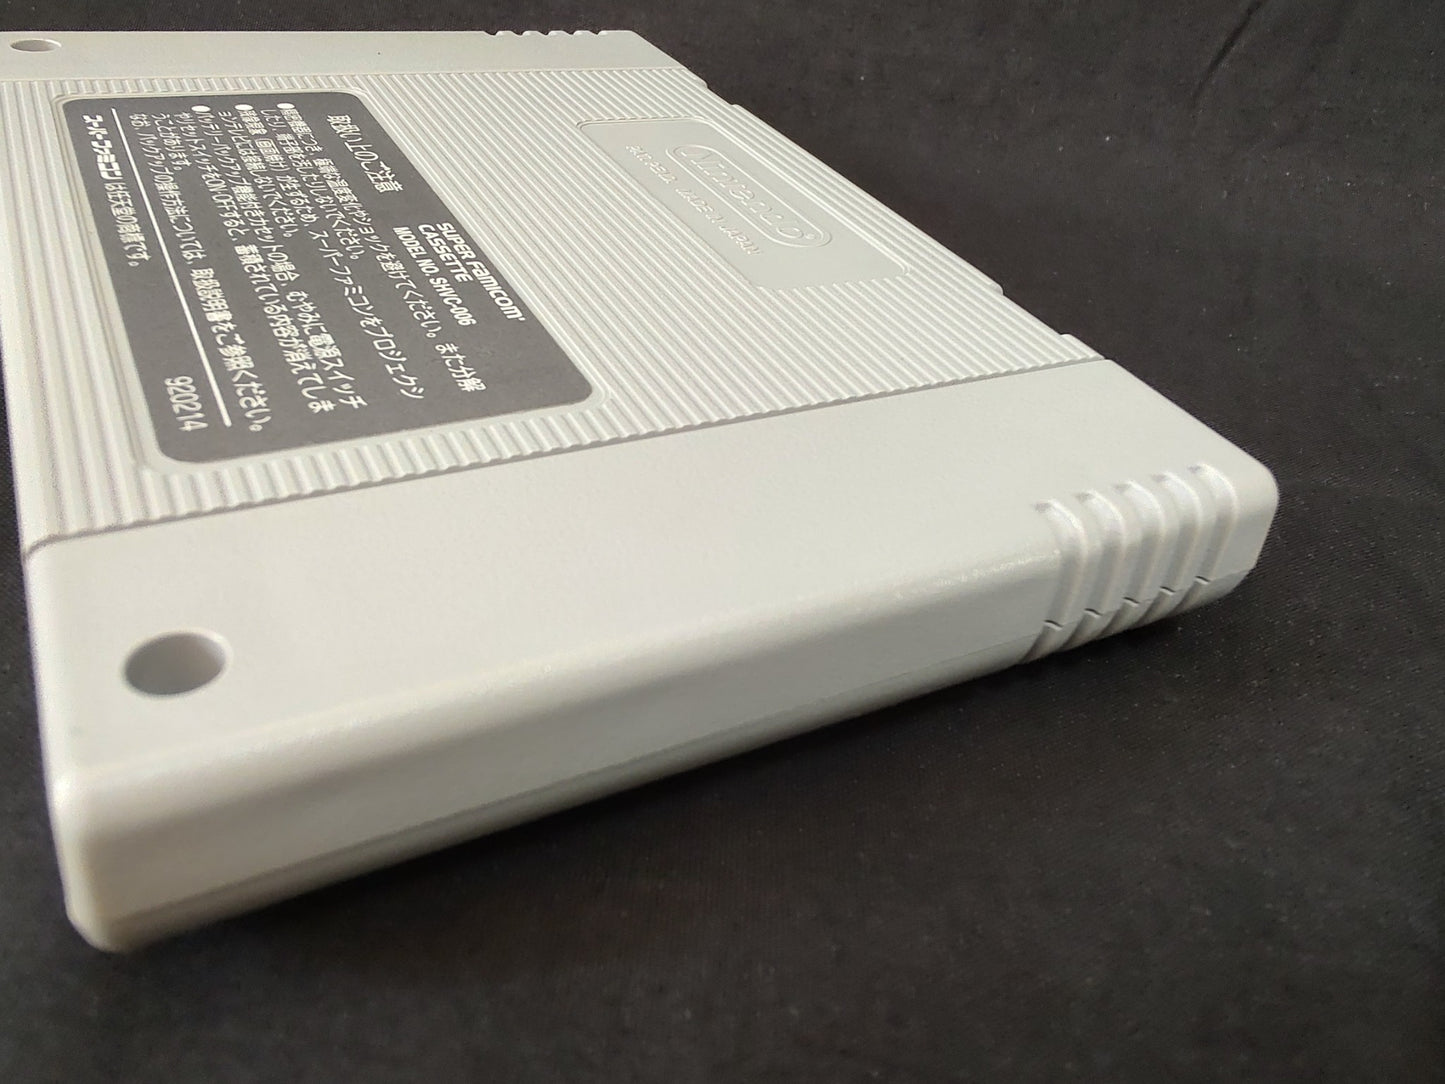 Shadowrun JP Ver. Super Famicom SNES Cartridge,Manual Boxed set, Working-g0304-